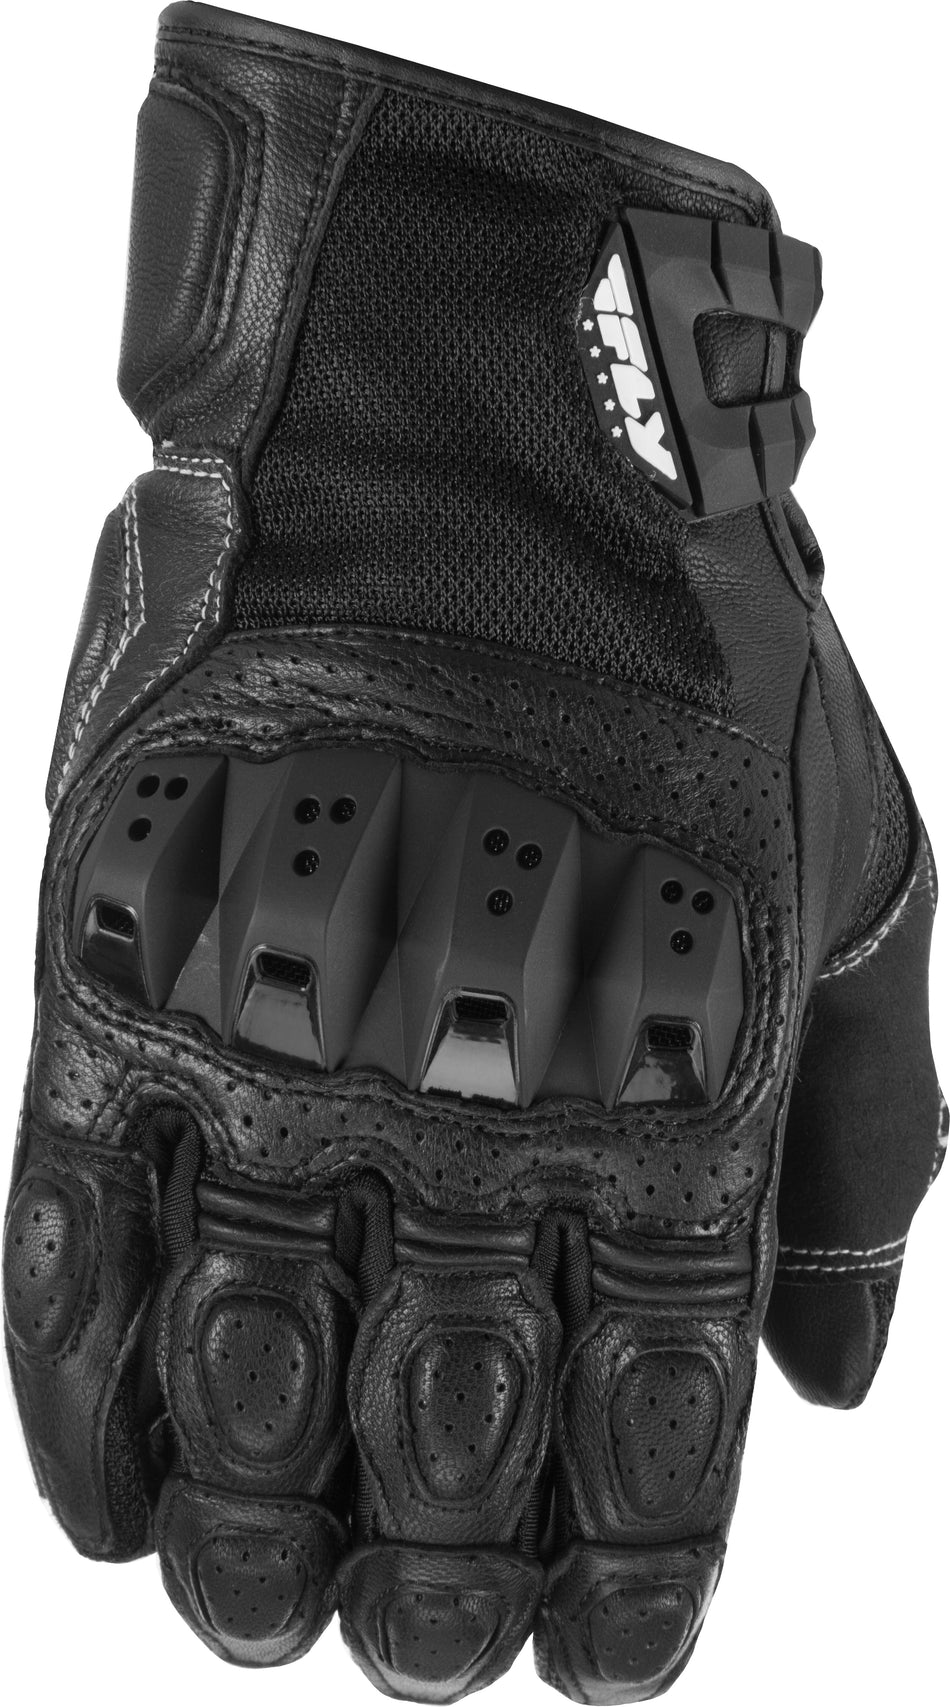 FLY RACING Brawler Gloves Black Md #5884 476-2040~3